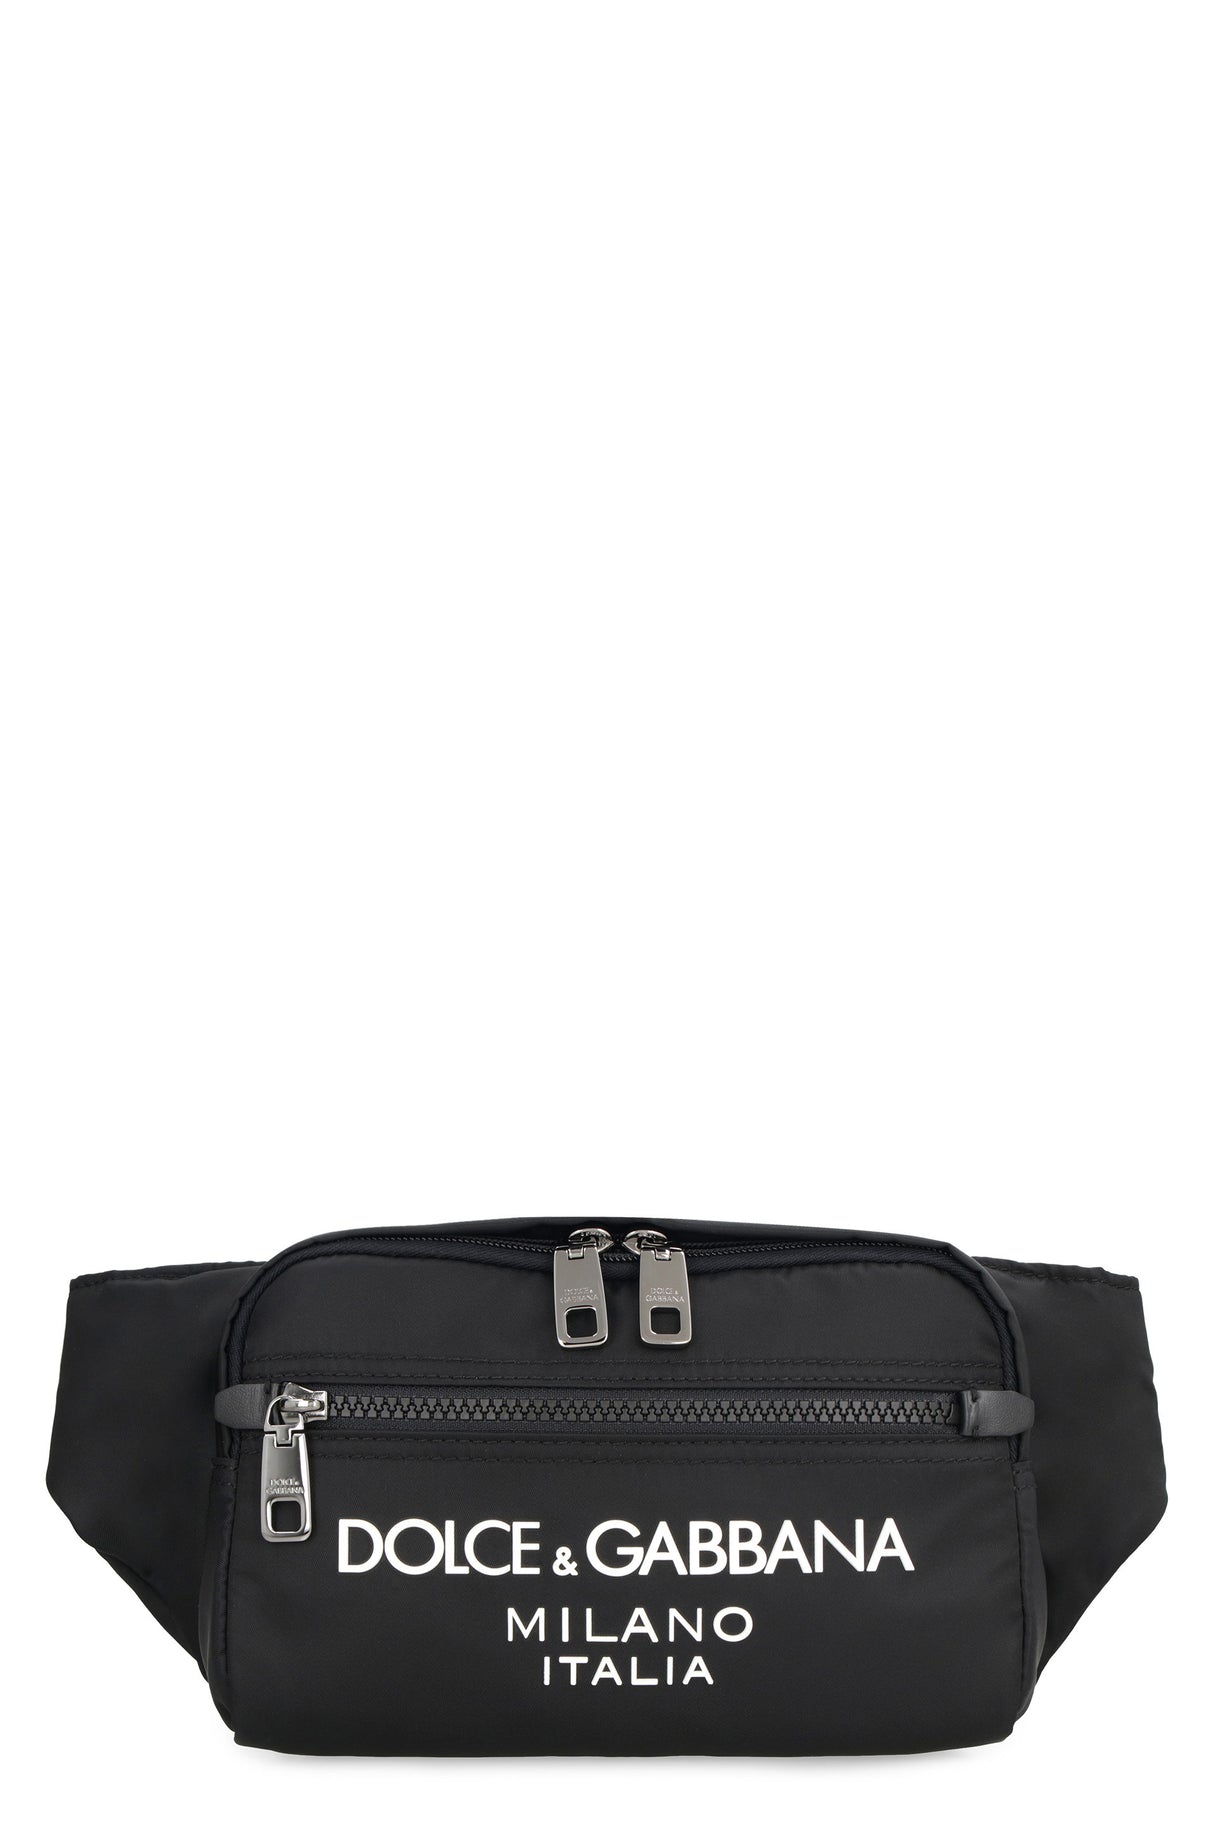 DOLCE & GABBANA Nylon Belt Bag with Contrast Logo and Metal Hardware